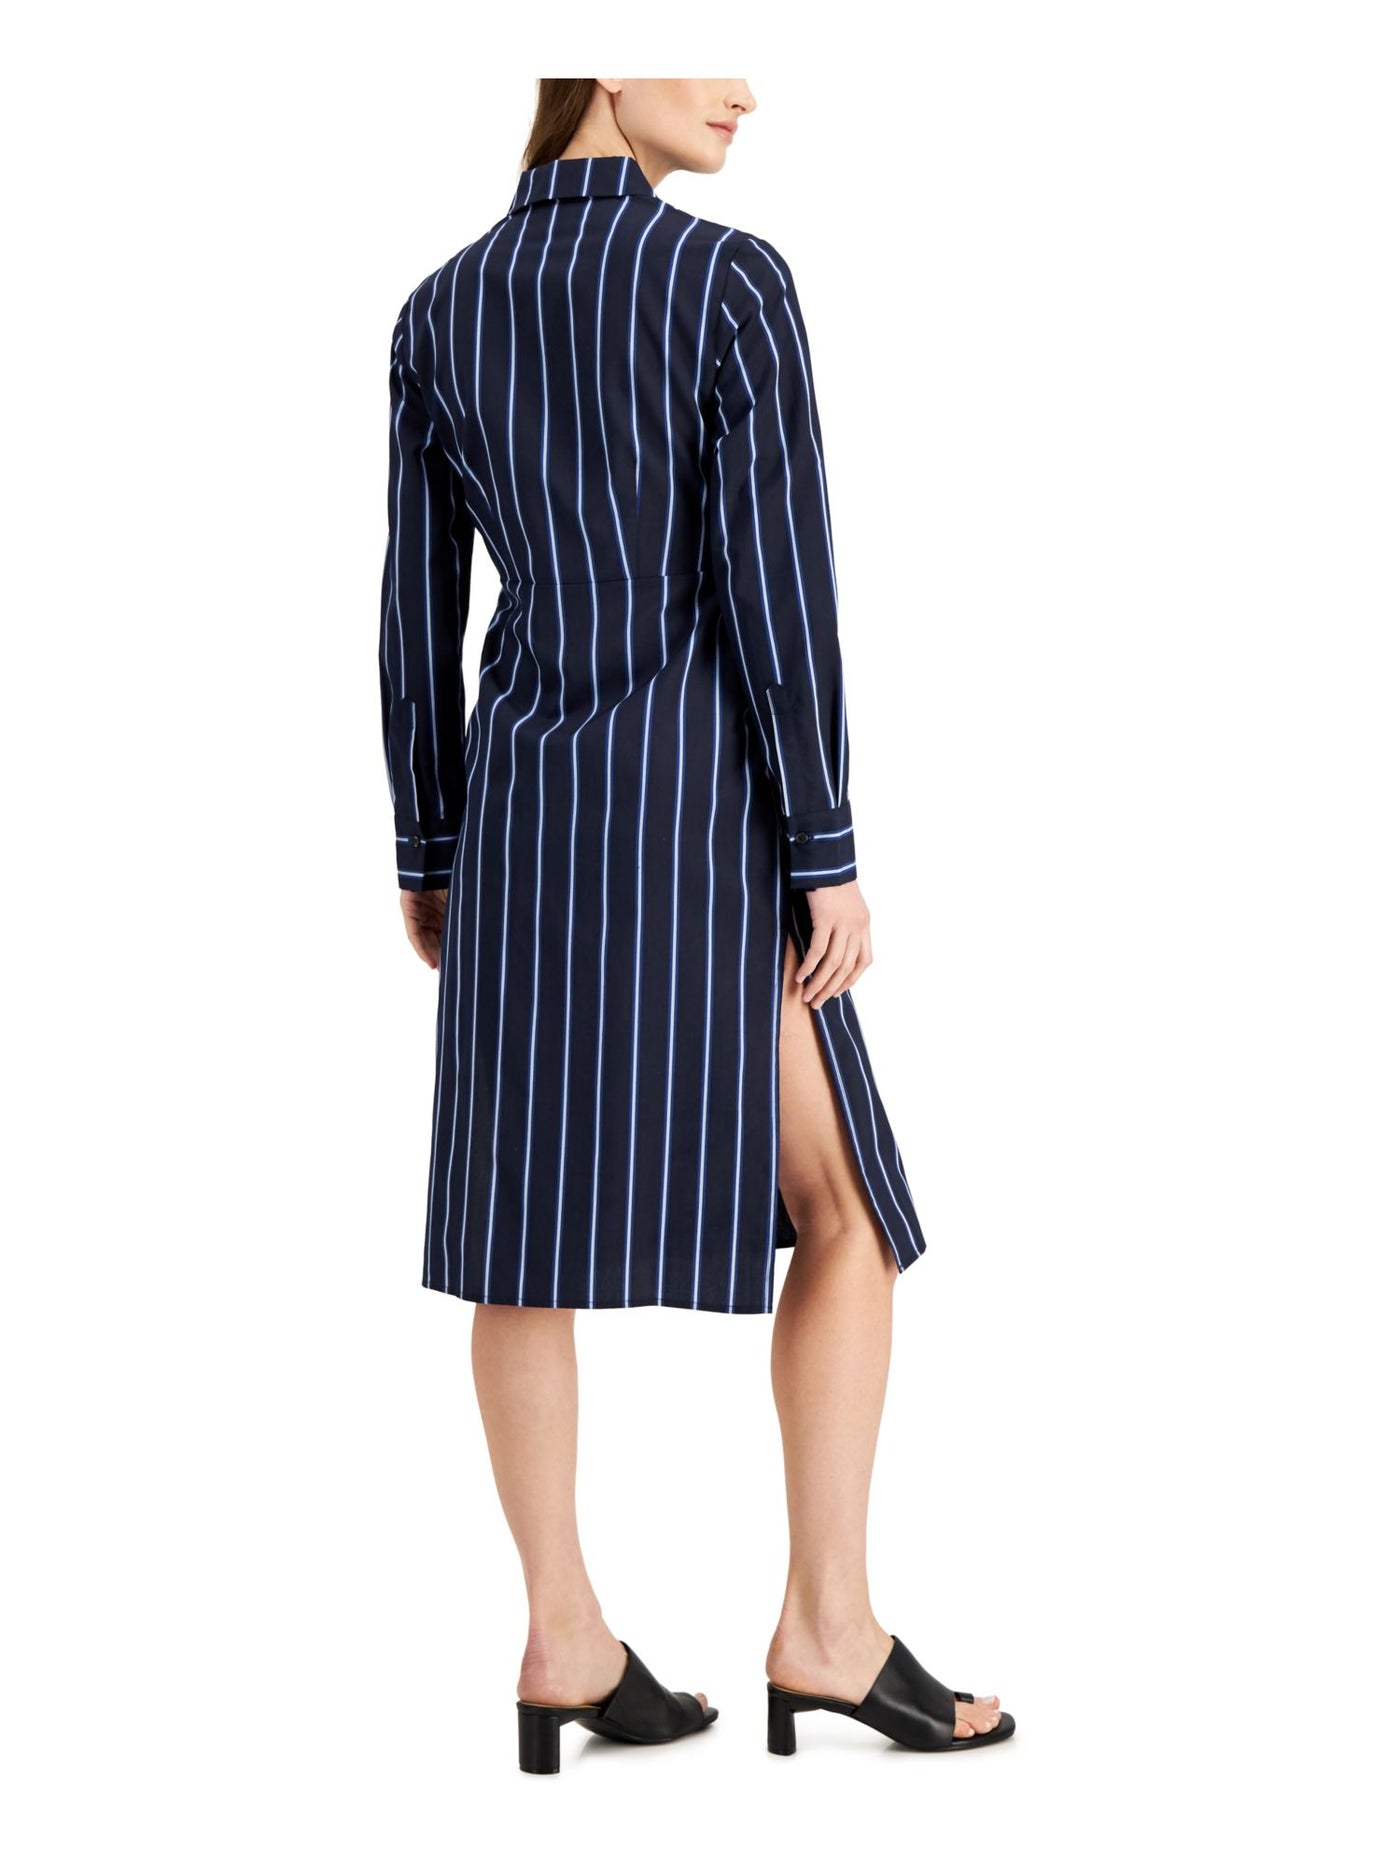 DONNA KARAN NEW YORK Womens Navy Zippered Unlined Tie Belt Slit Sides Button Top Striped Cuffed Sleeve Collared Midi Shirt Dress 2